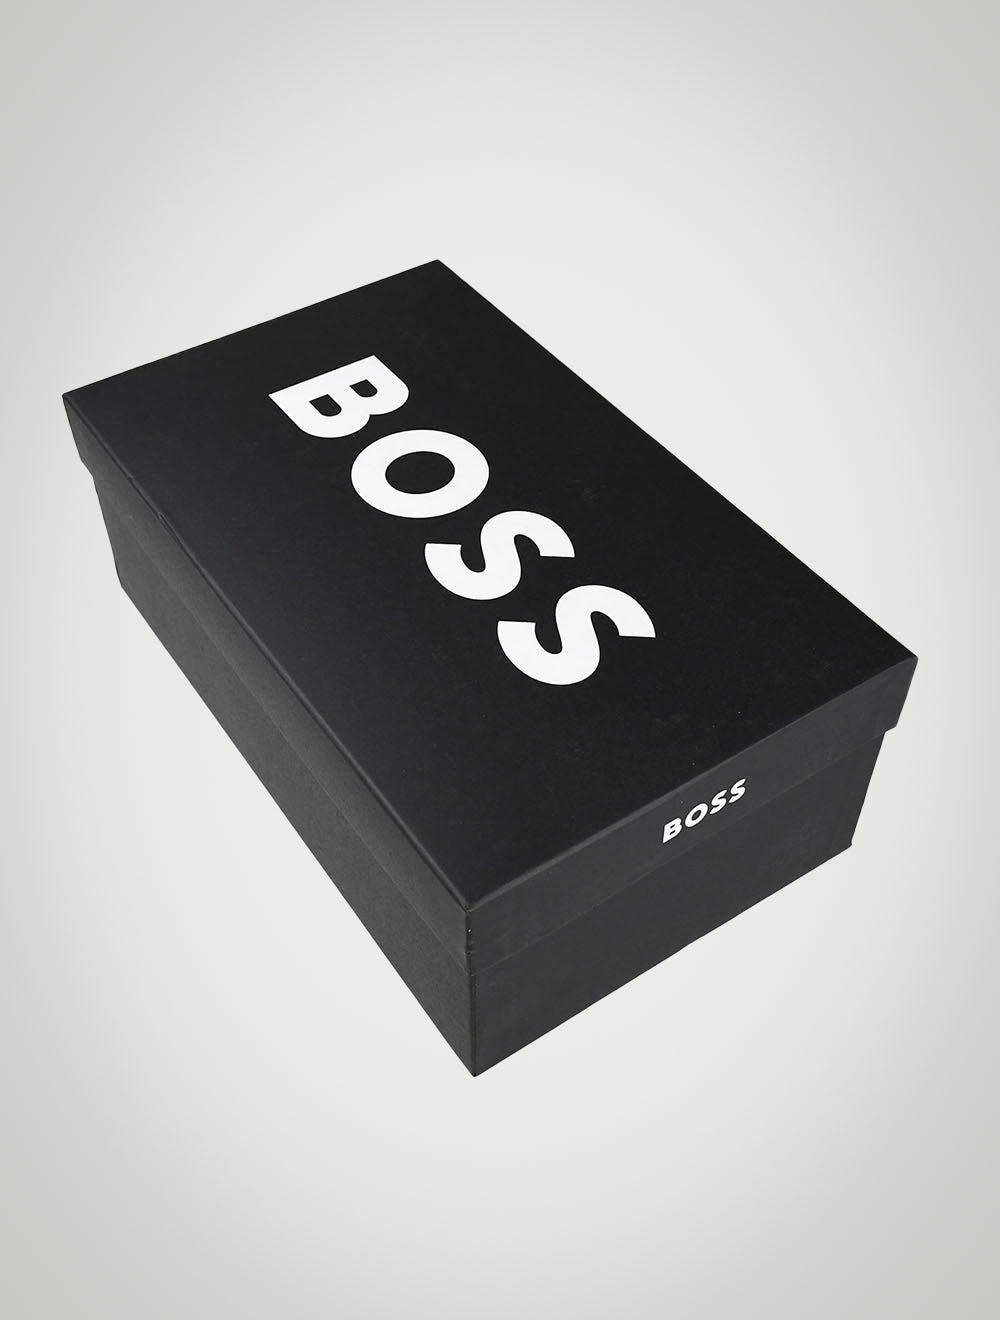 Hugo Boss schwarze Lederturnschuhe